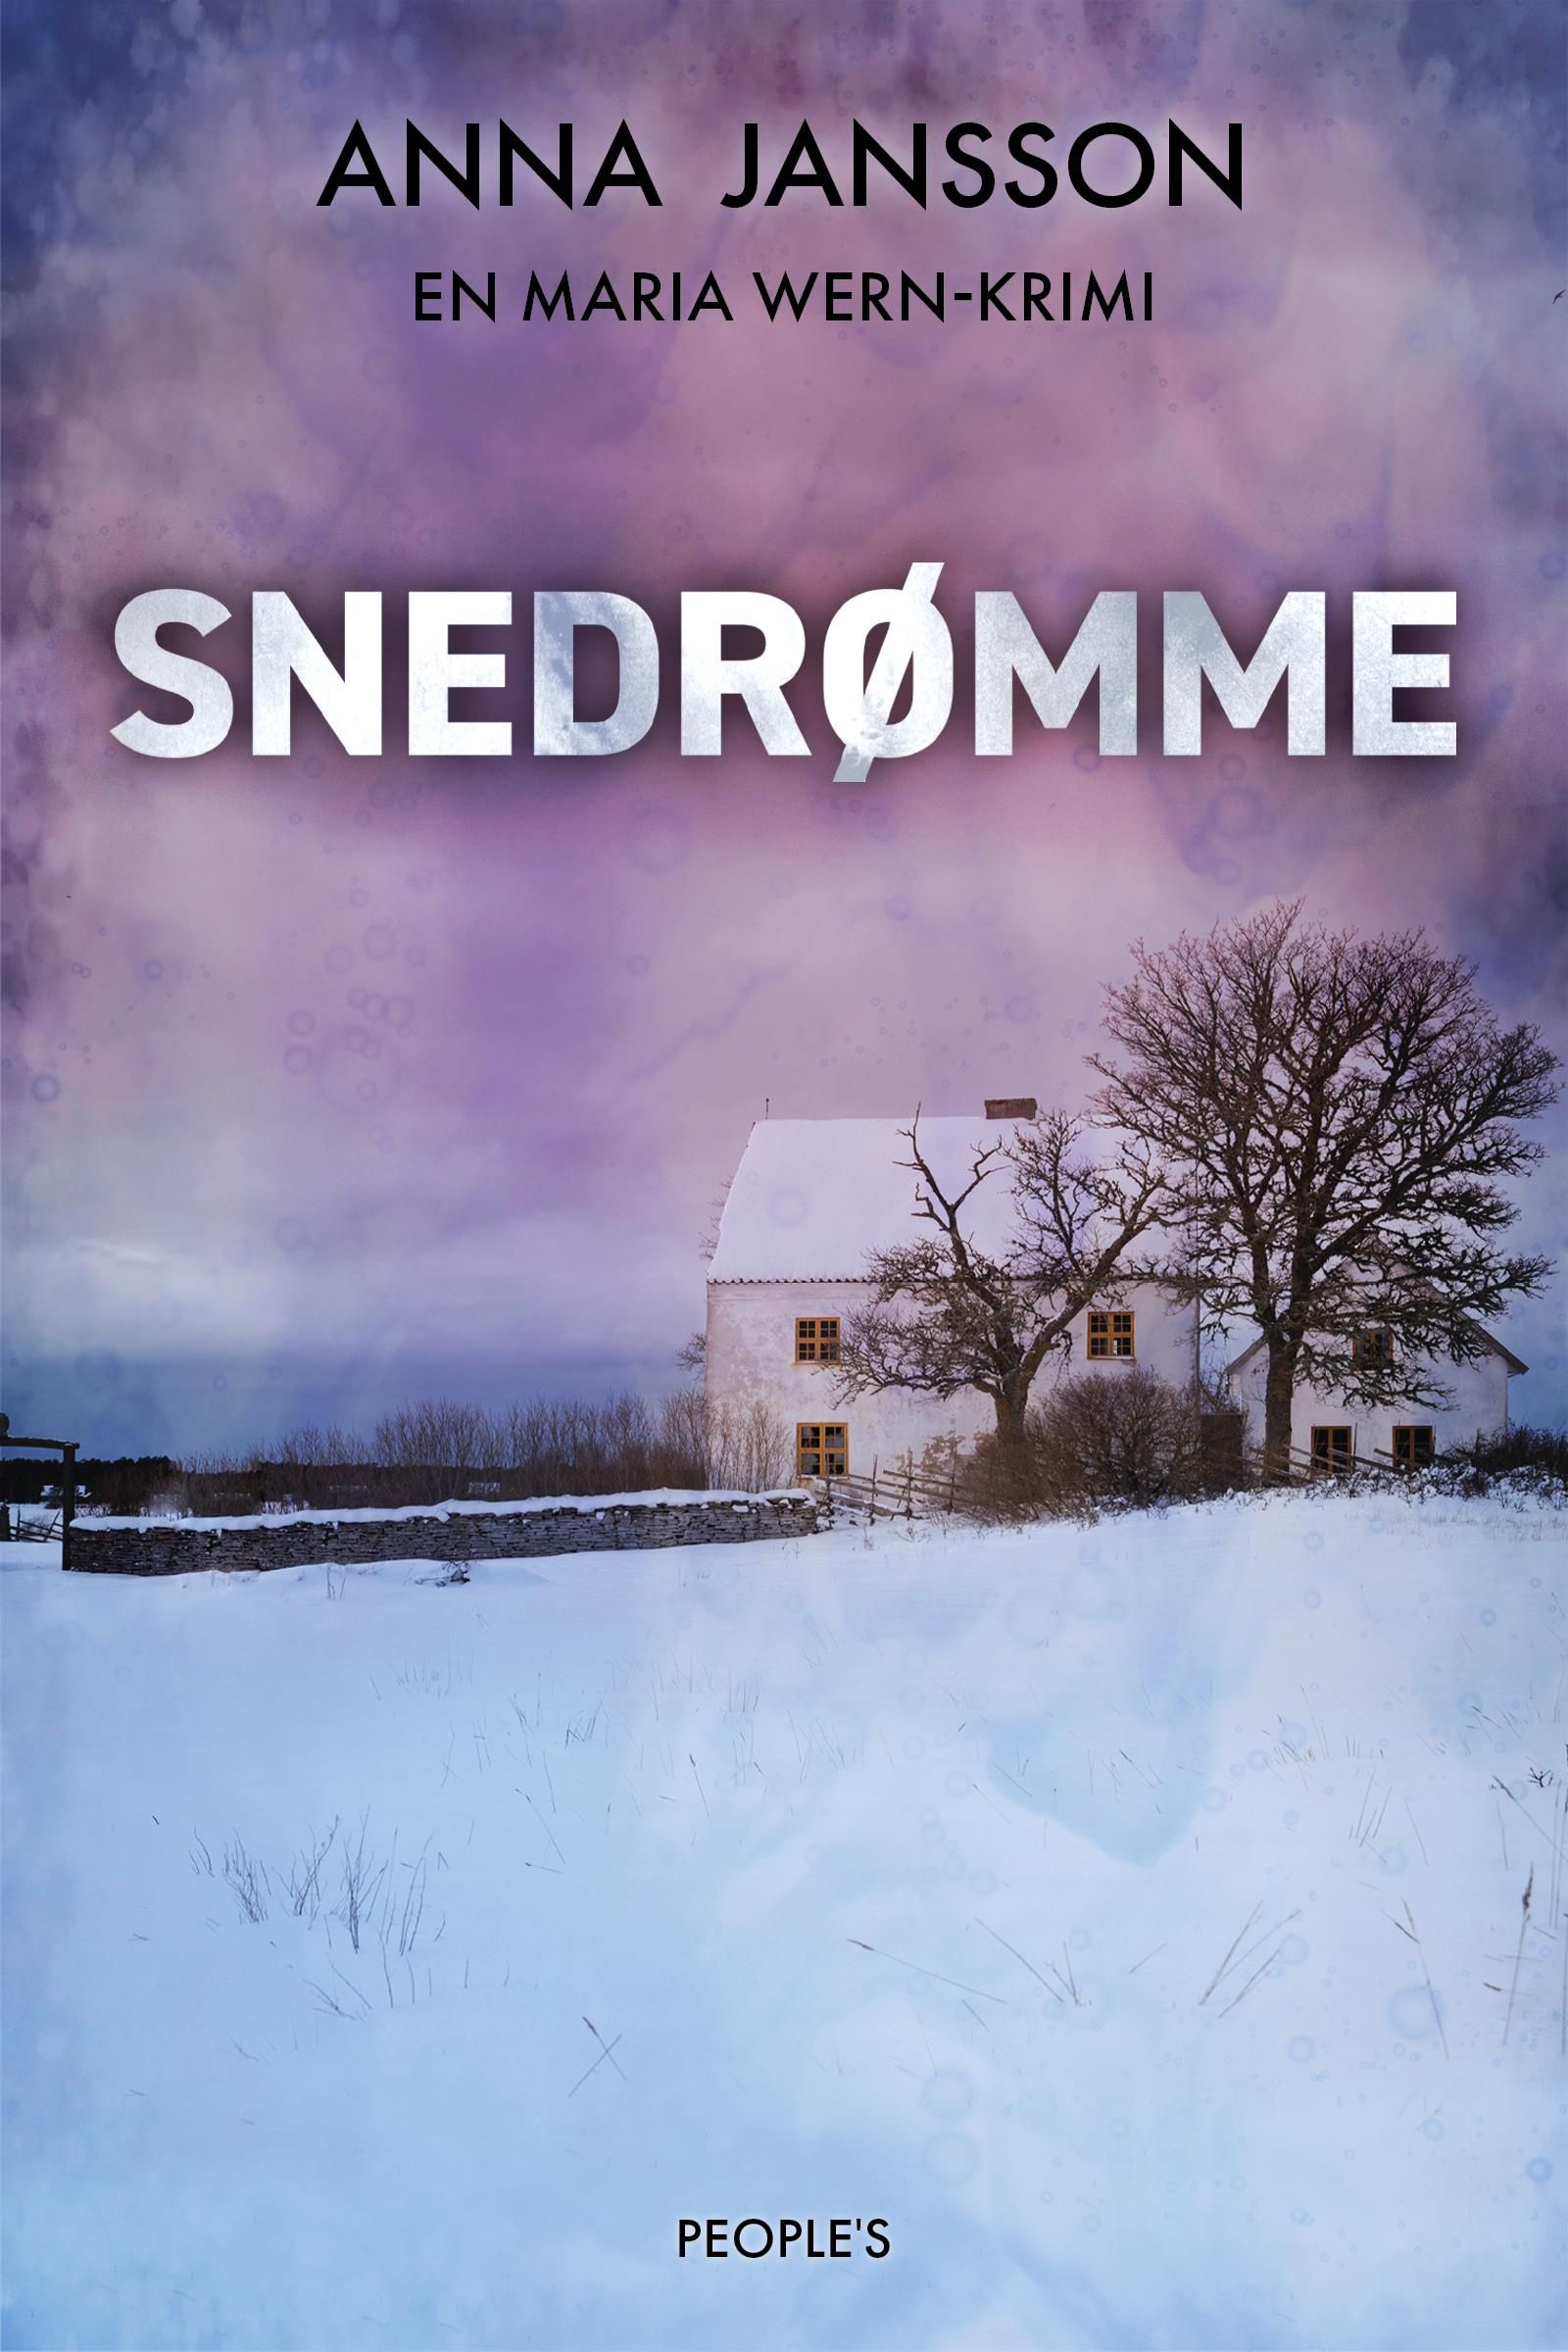 Snedrømme, eBook by Anna Jansson